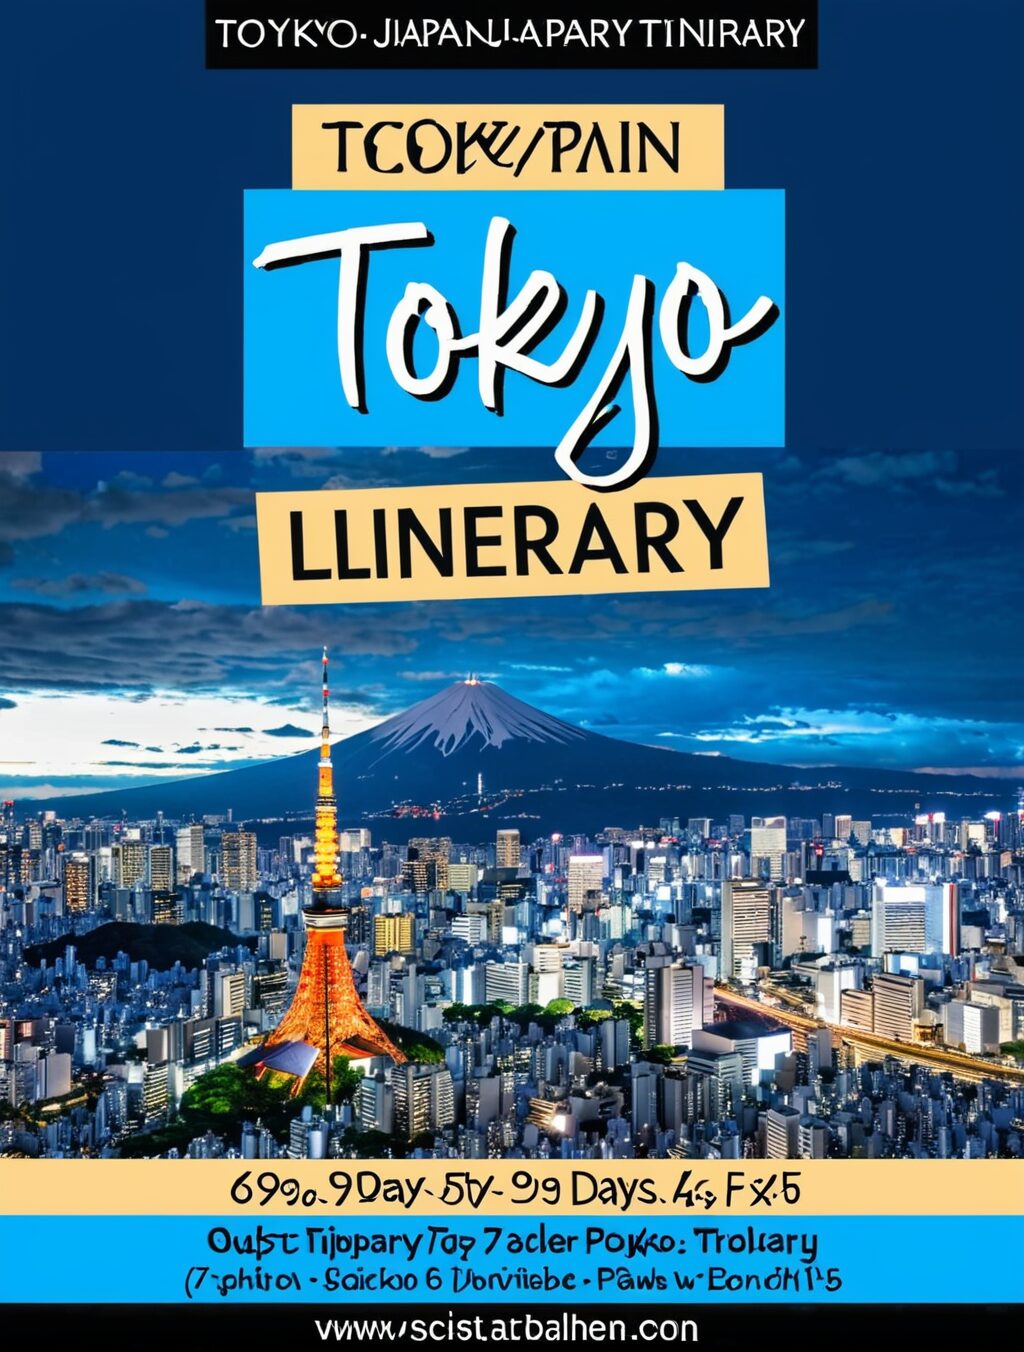 tokyo japan itinerary 6 days